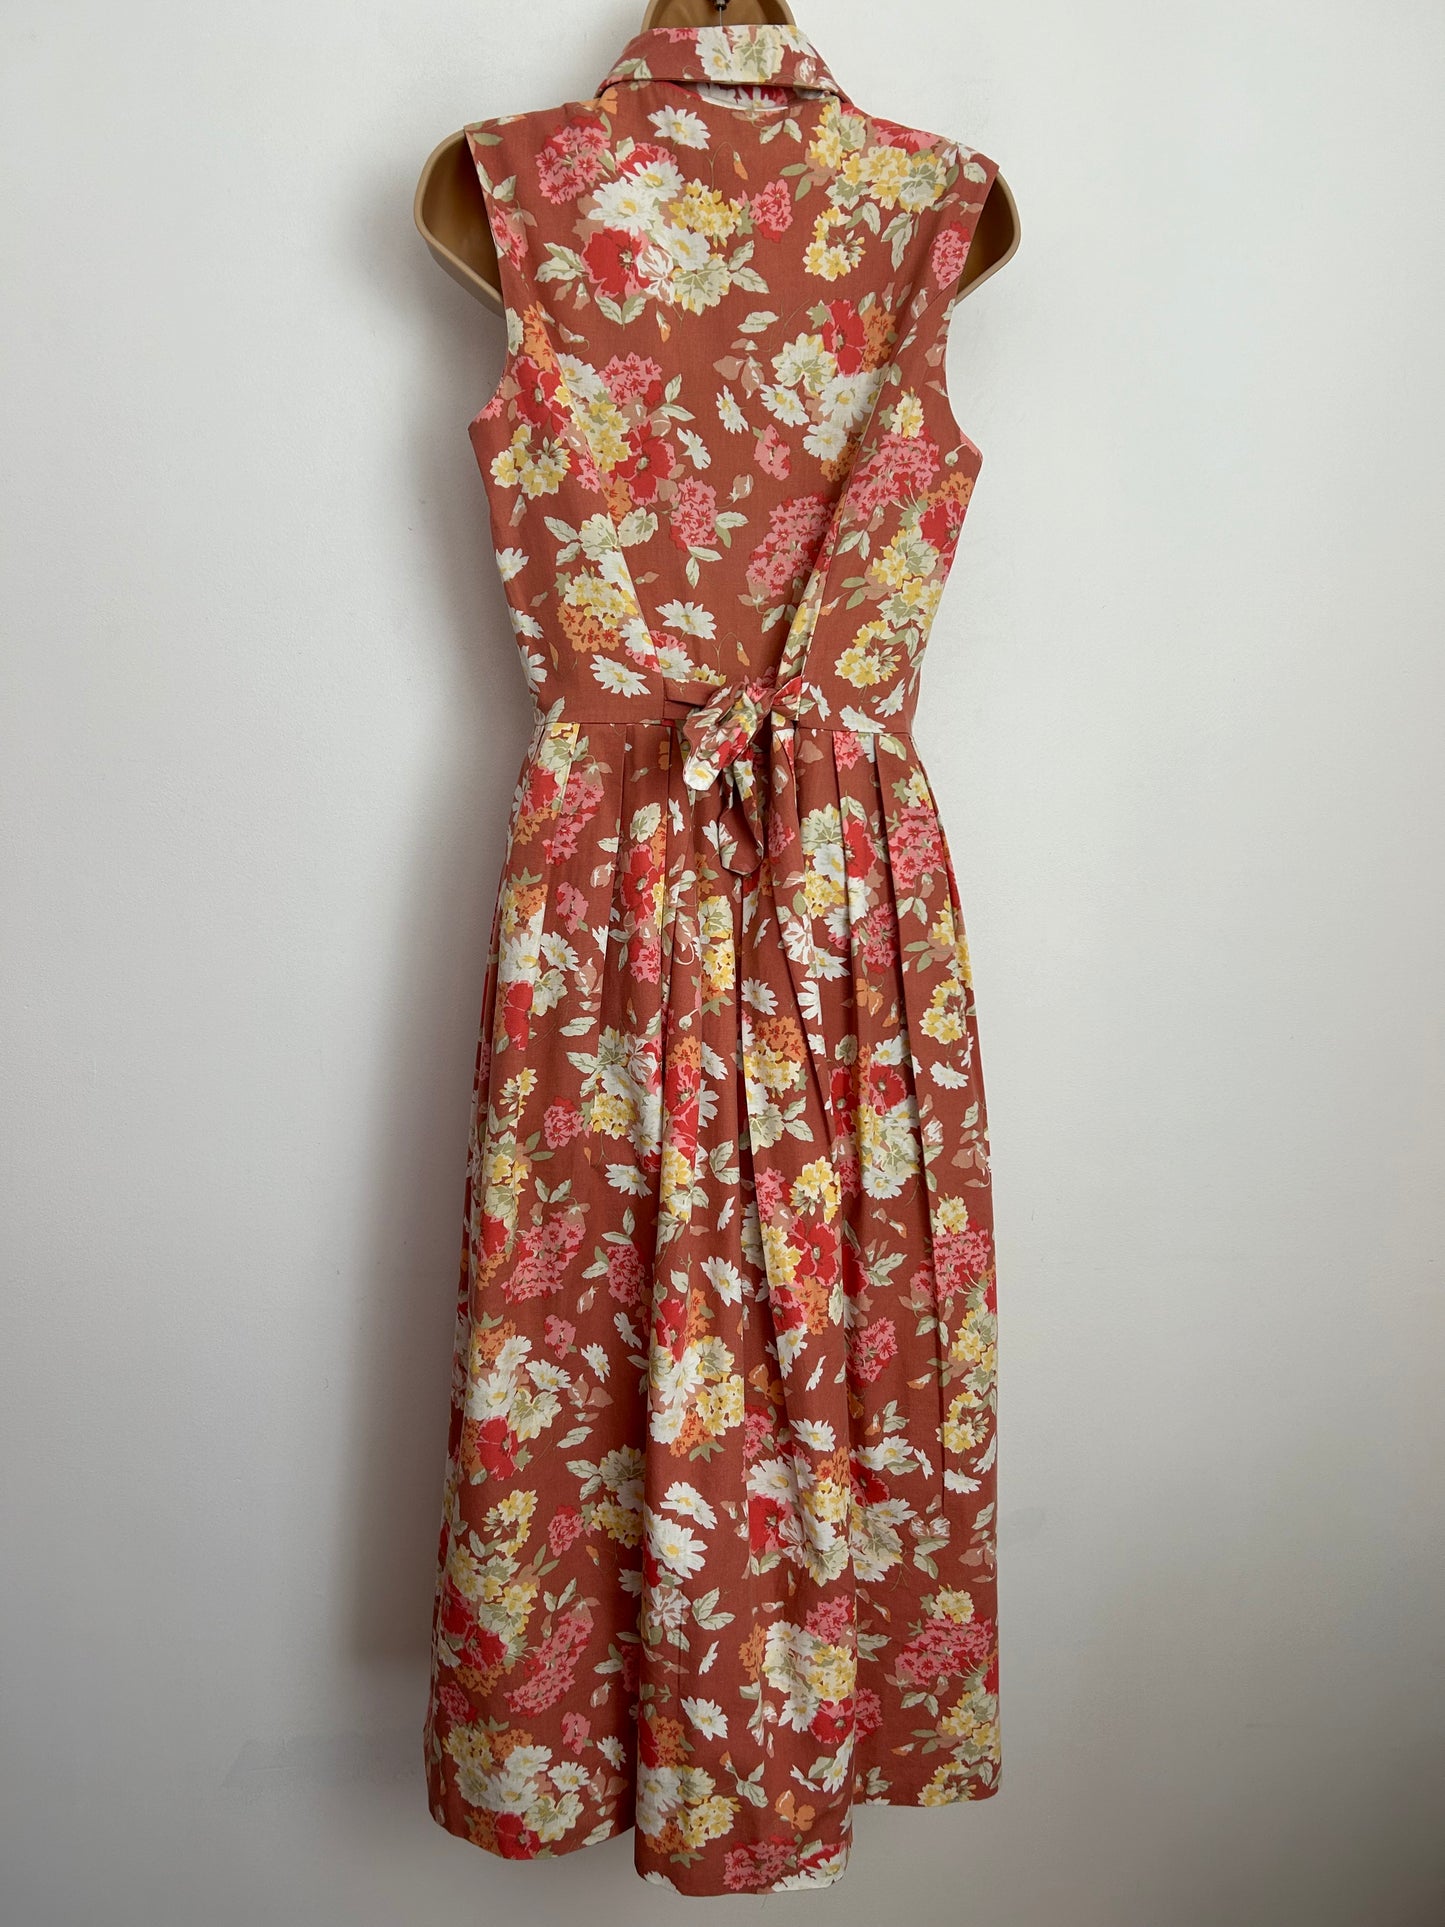 Vintage 1980s LAURA ASHLEY UK Size 8 (Size 12 On Label) Pale Sienna Brown Floral Print Cotton Midi Dress